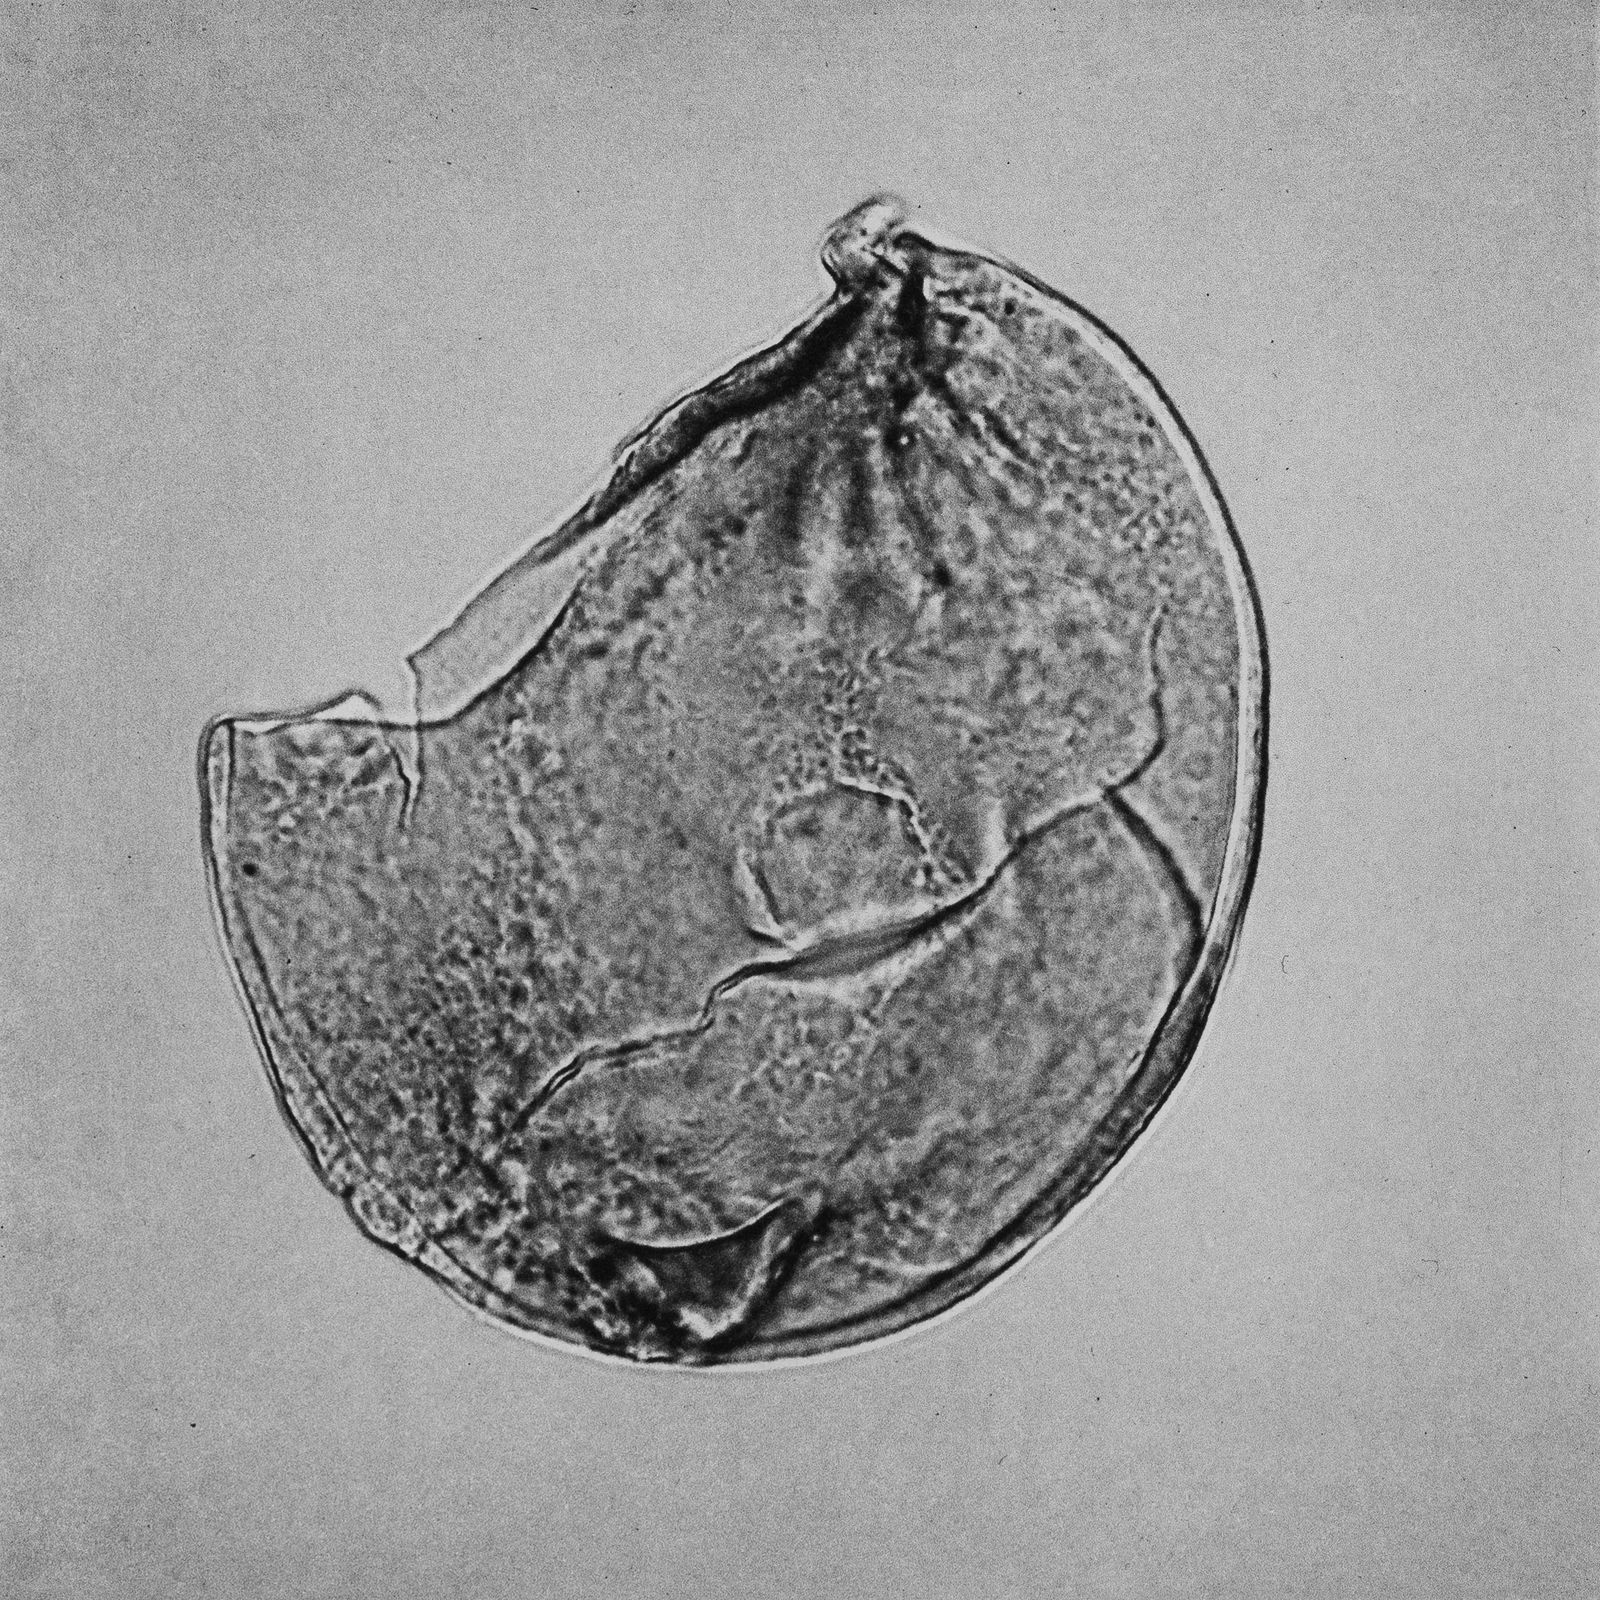 © suzette bousema - Thalassiphora pelagica From the project 'Dinoflagellates'